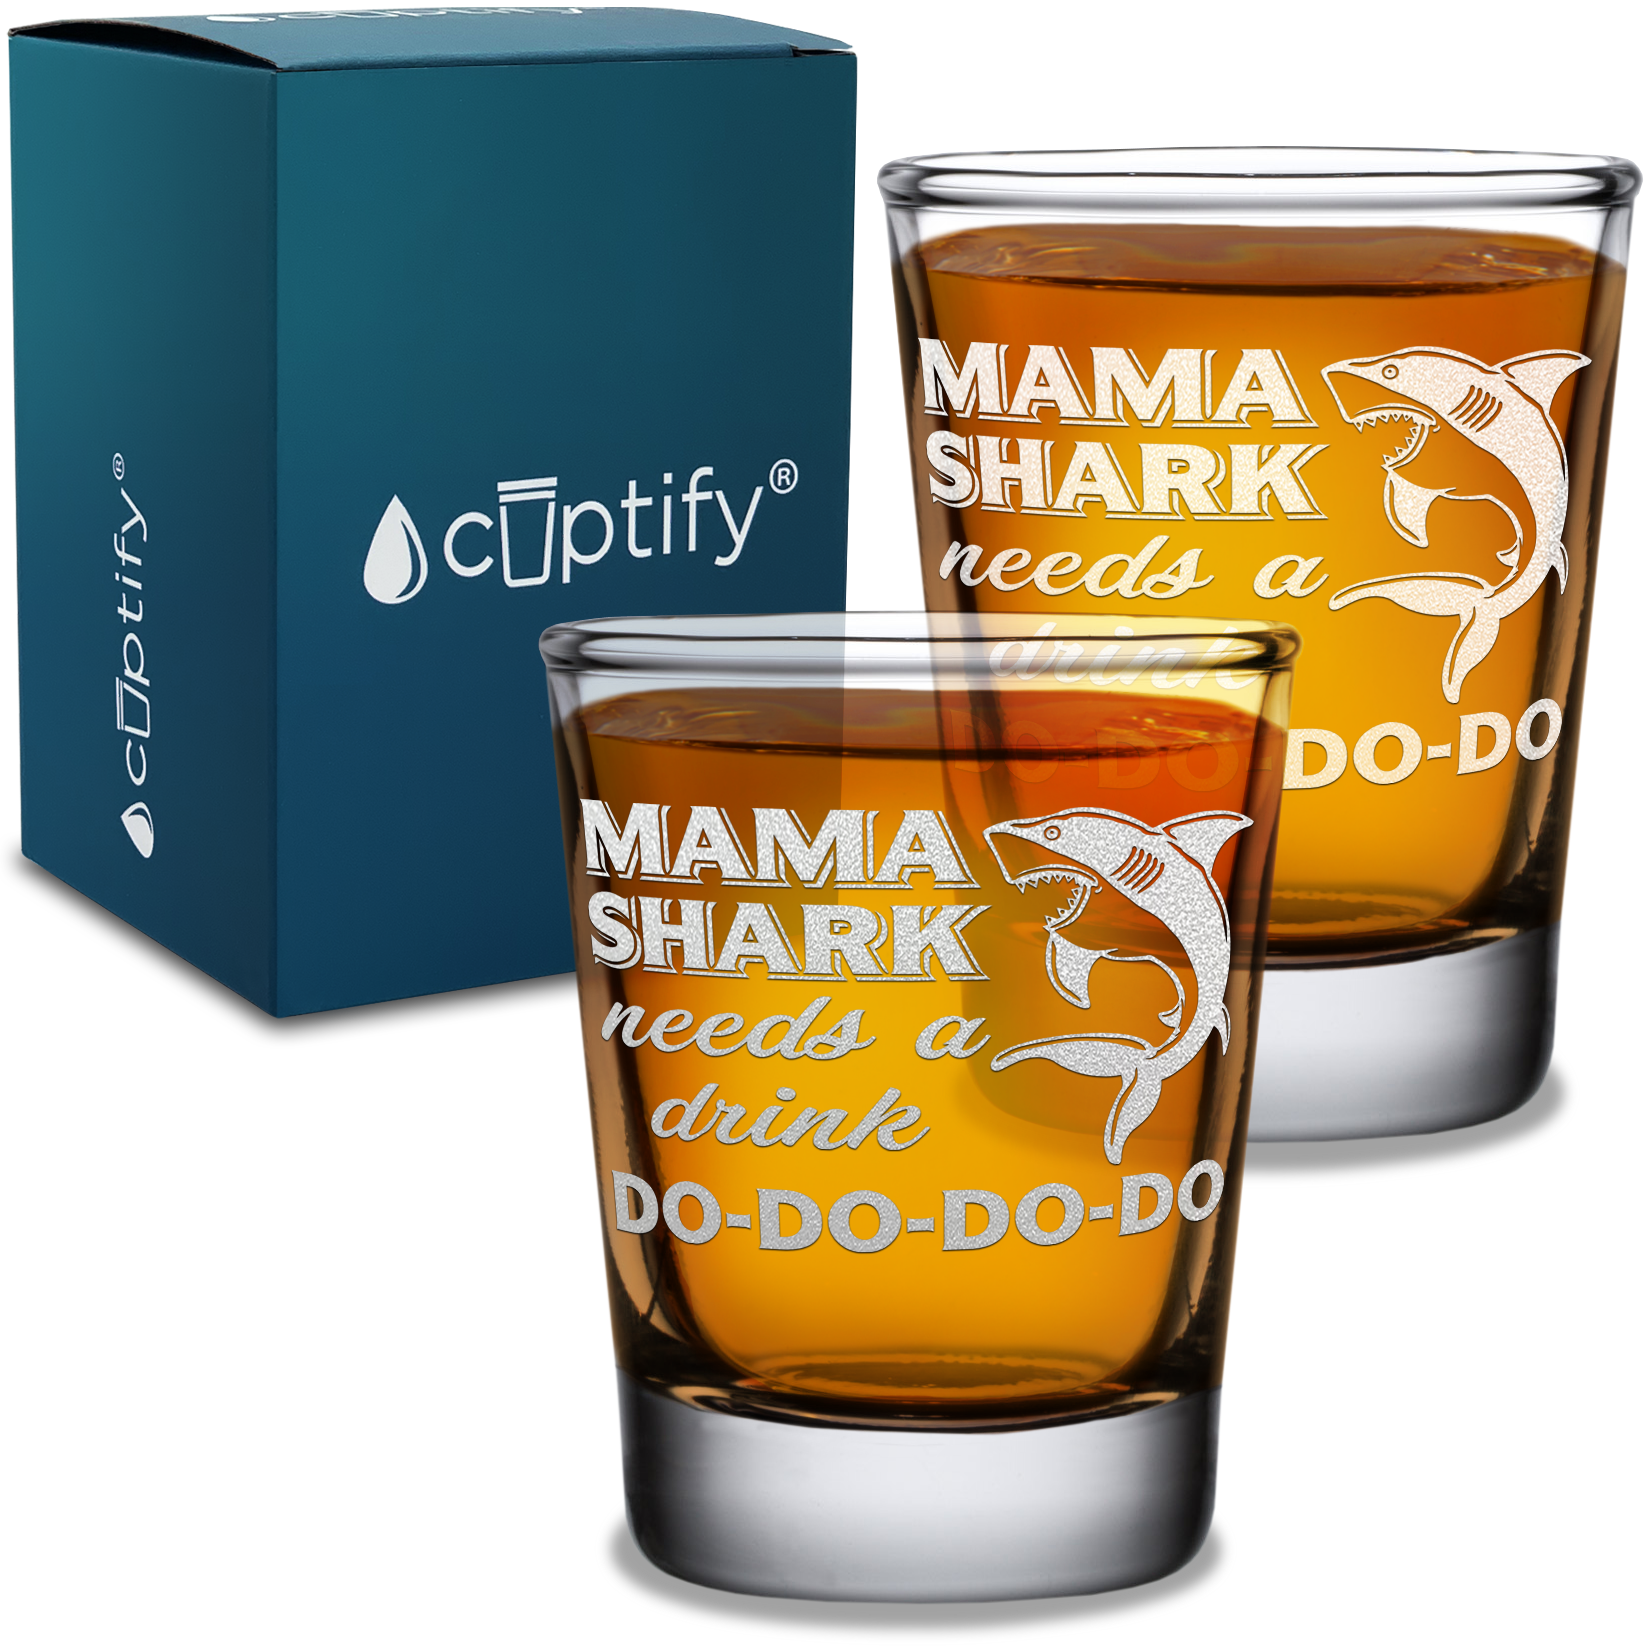  Mama Shark Needs A Drink Etched on 2oz Shot Glasses - Set of 2